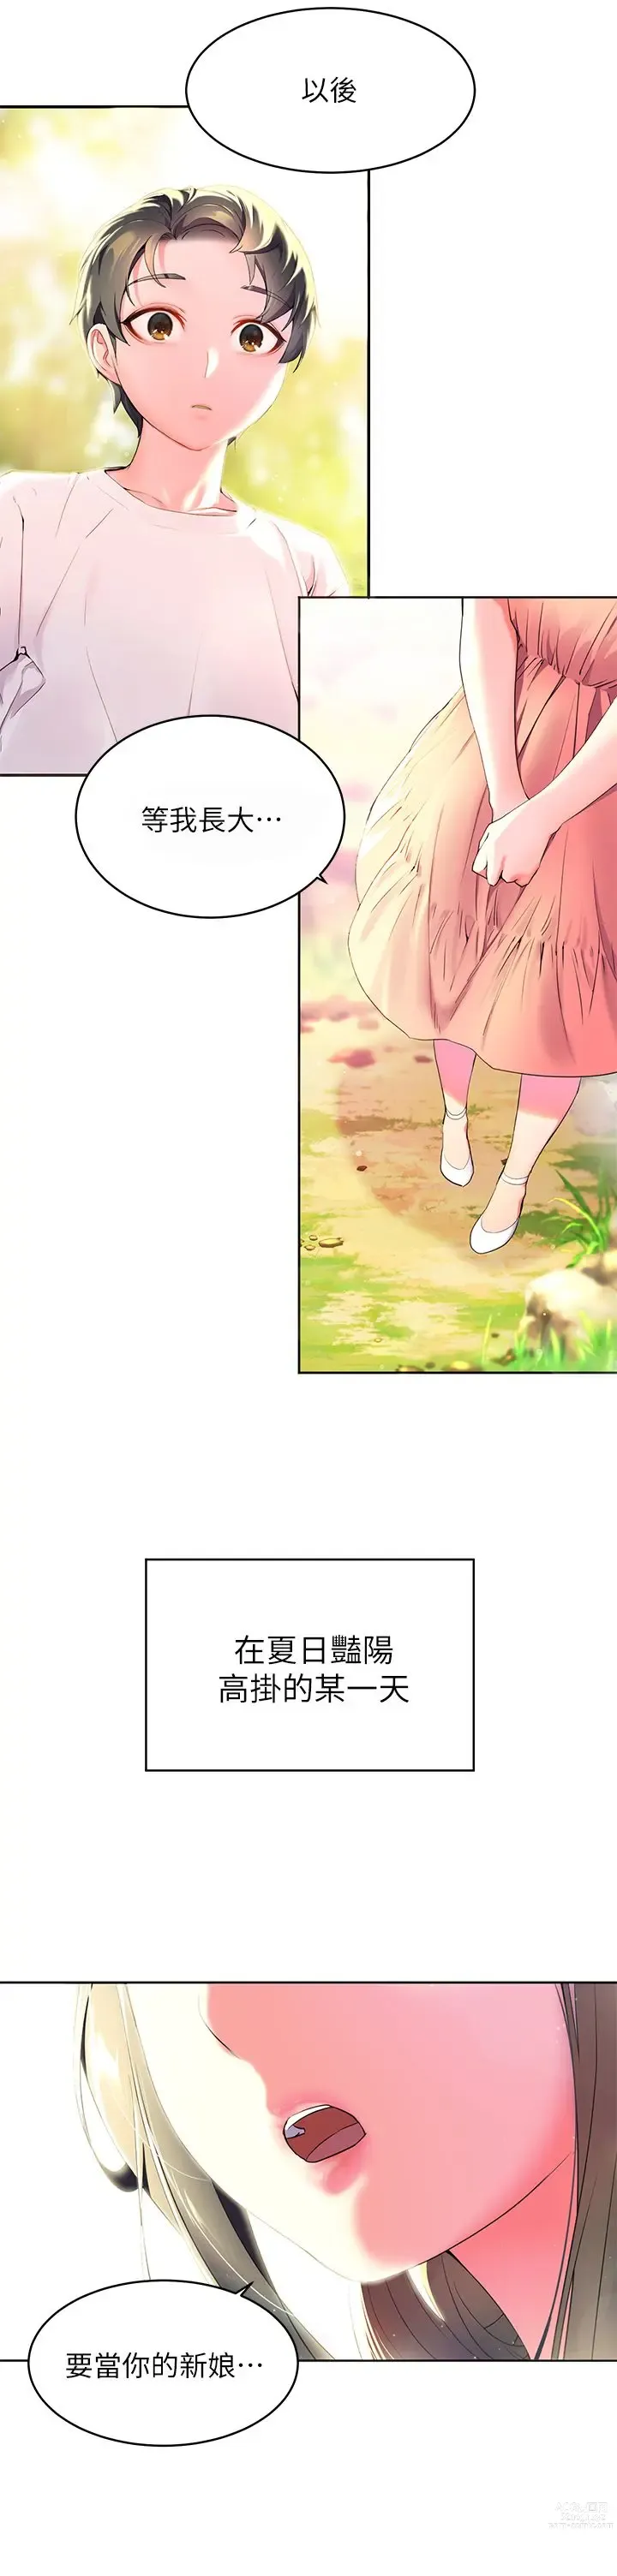 Page 7 of manga 幸福小岛/Childhood Bride